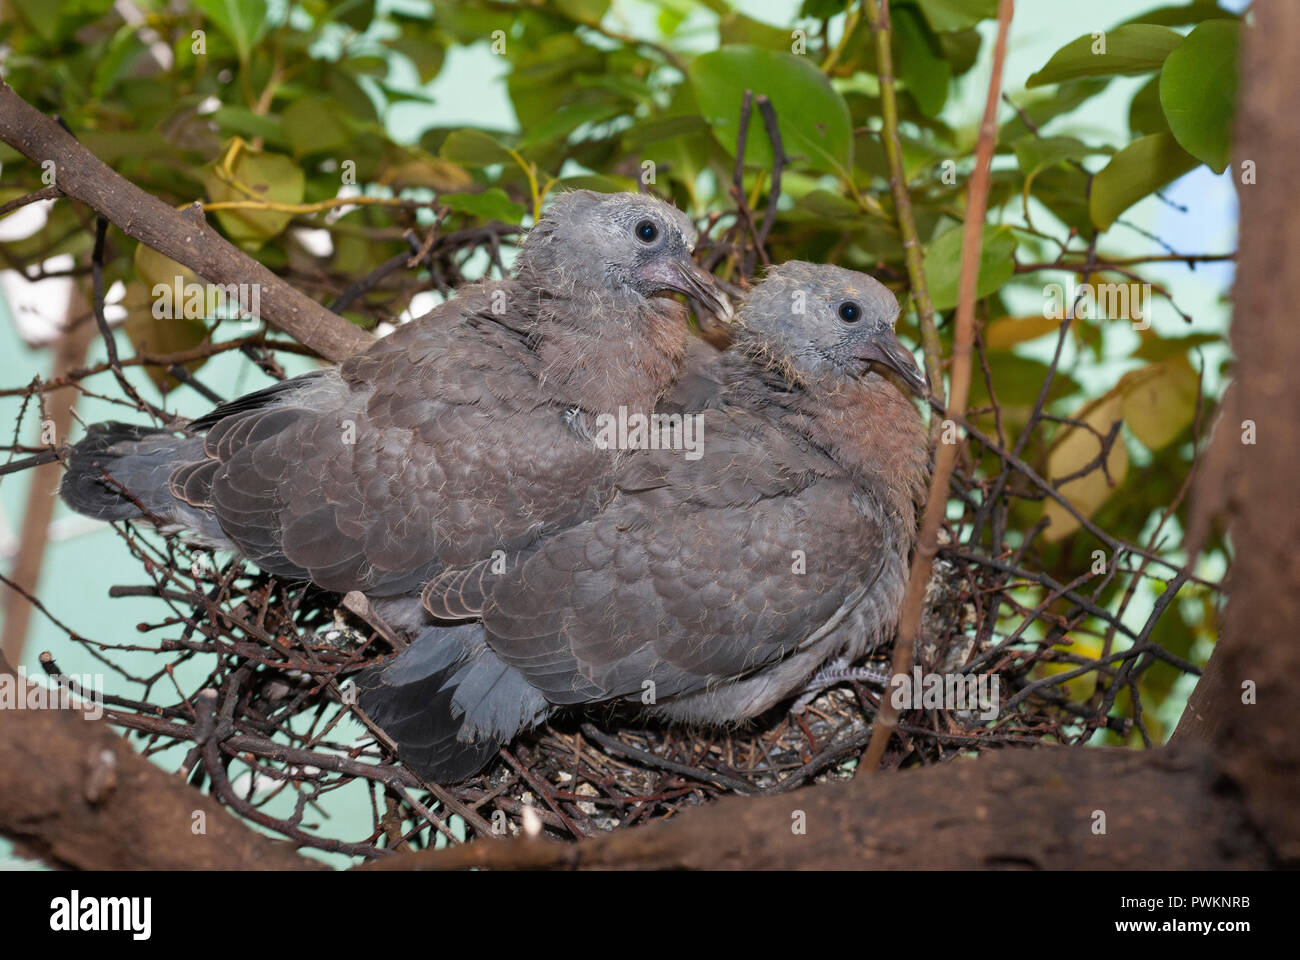 Woodpigeon Chicks, Columba palumbus, Precsocial in Nest, Londres, Royaume-Uni Banque D'Images